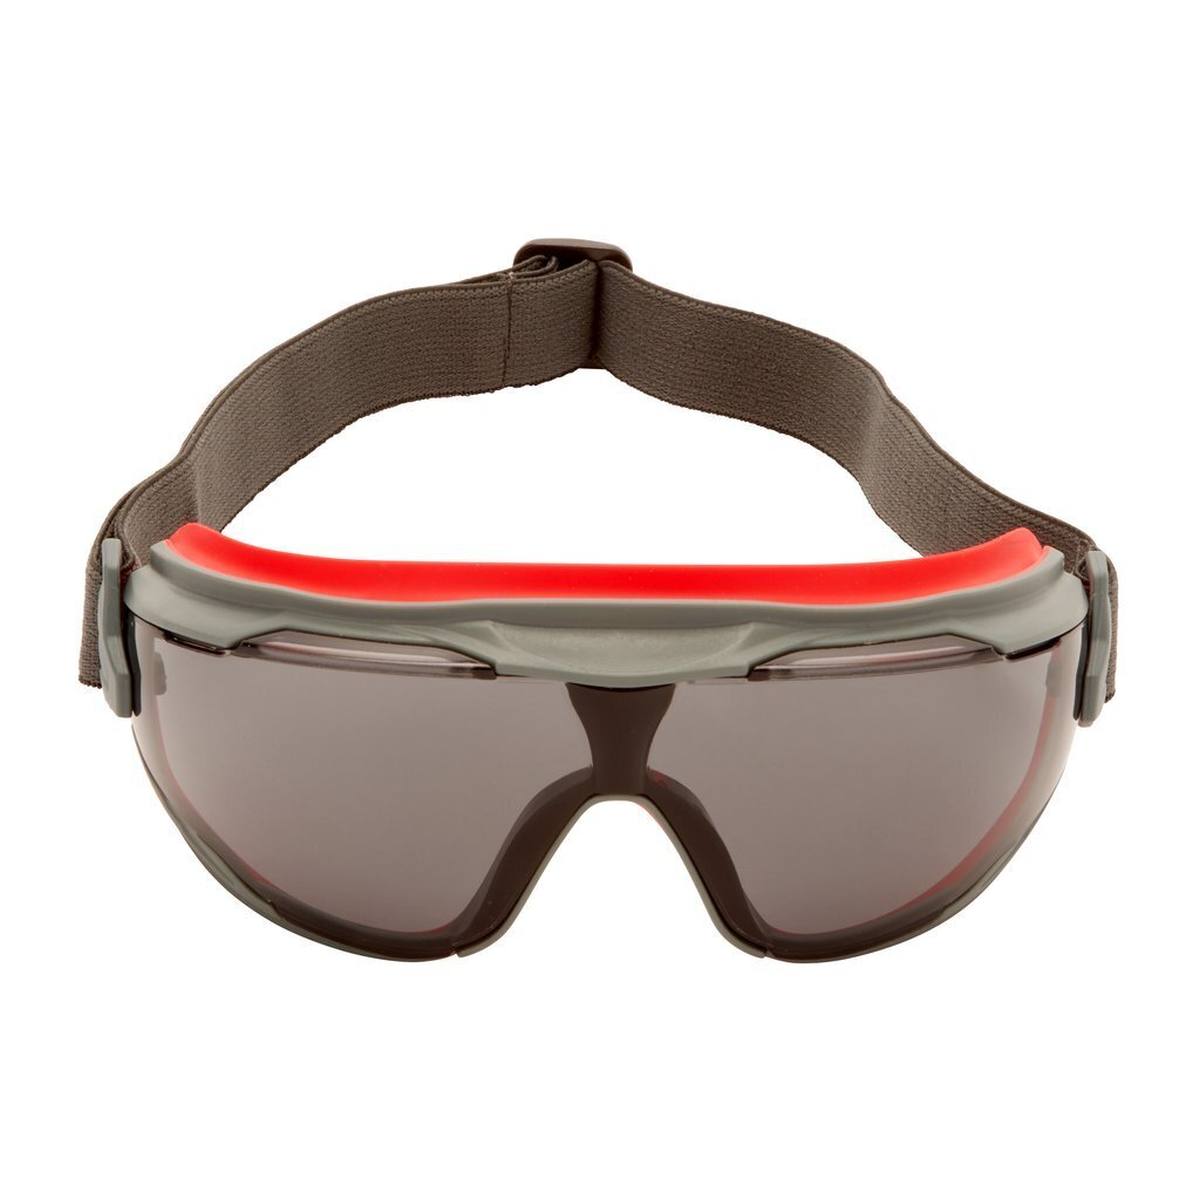 3M GoggleGear 500 full-vision goggles GG502SGAF-EU, red-grey frame, grey lenses, black neoprene headband